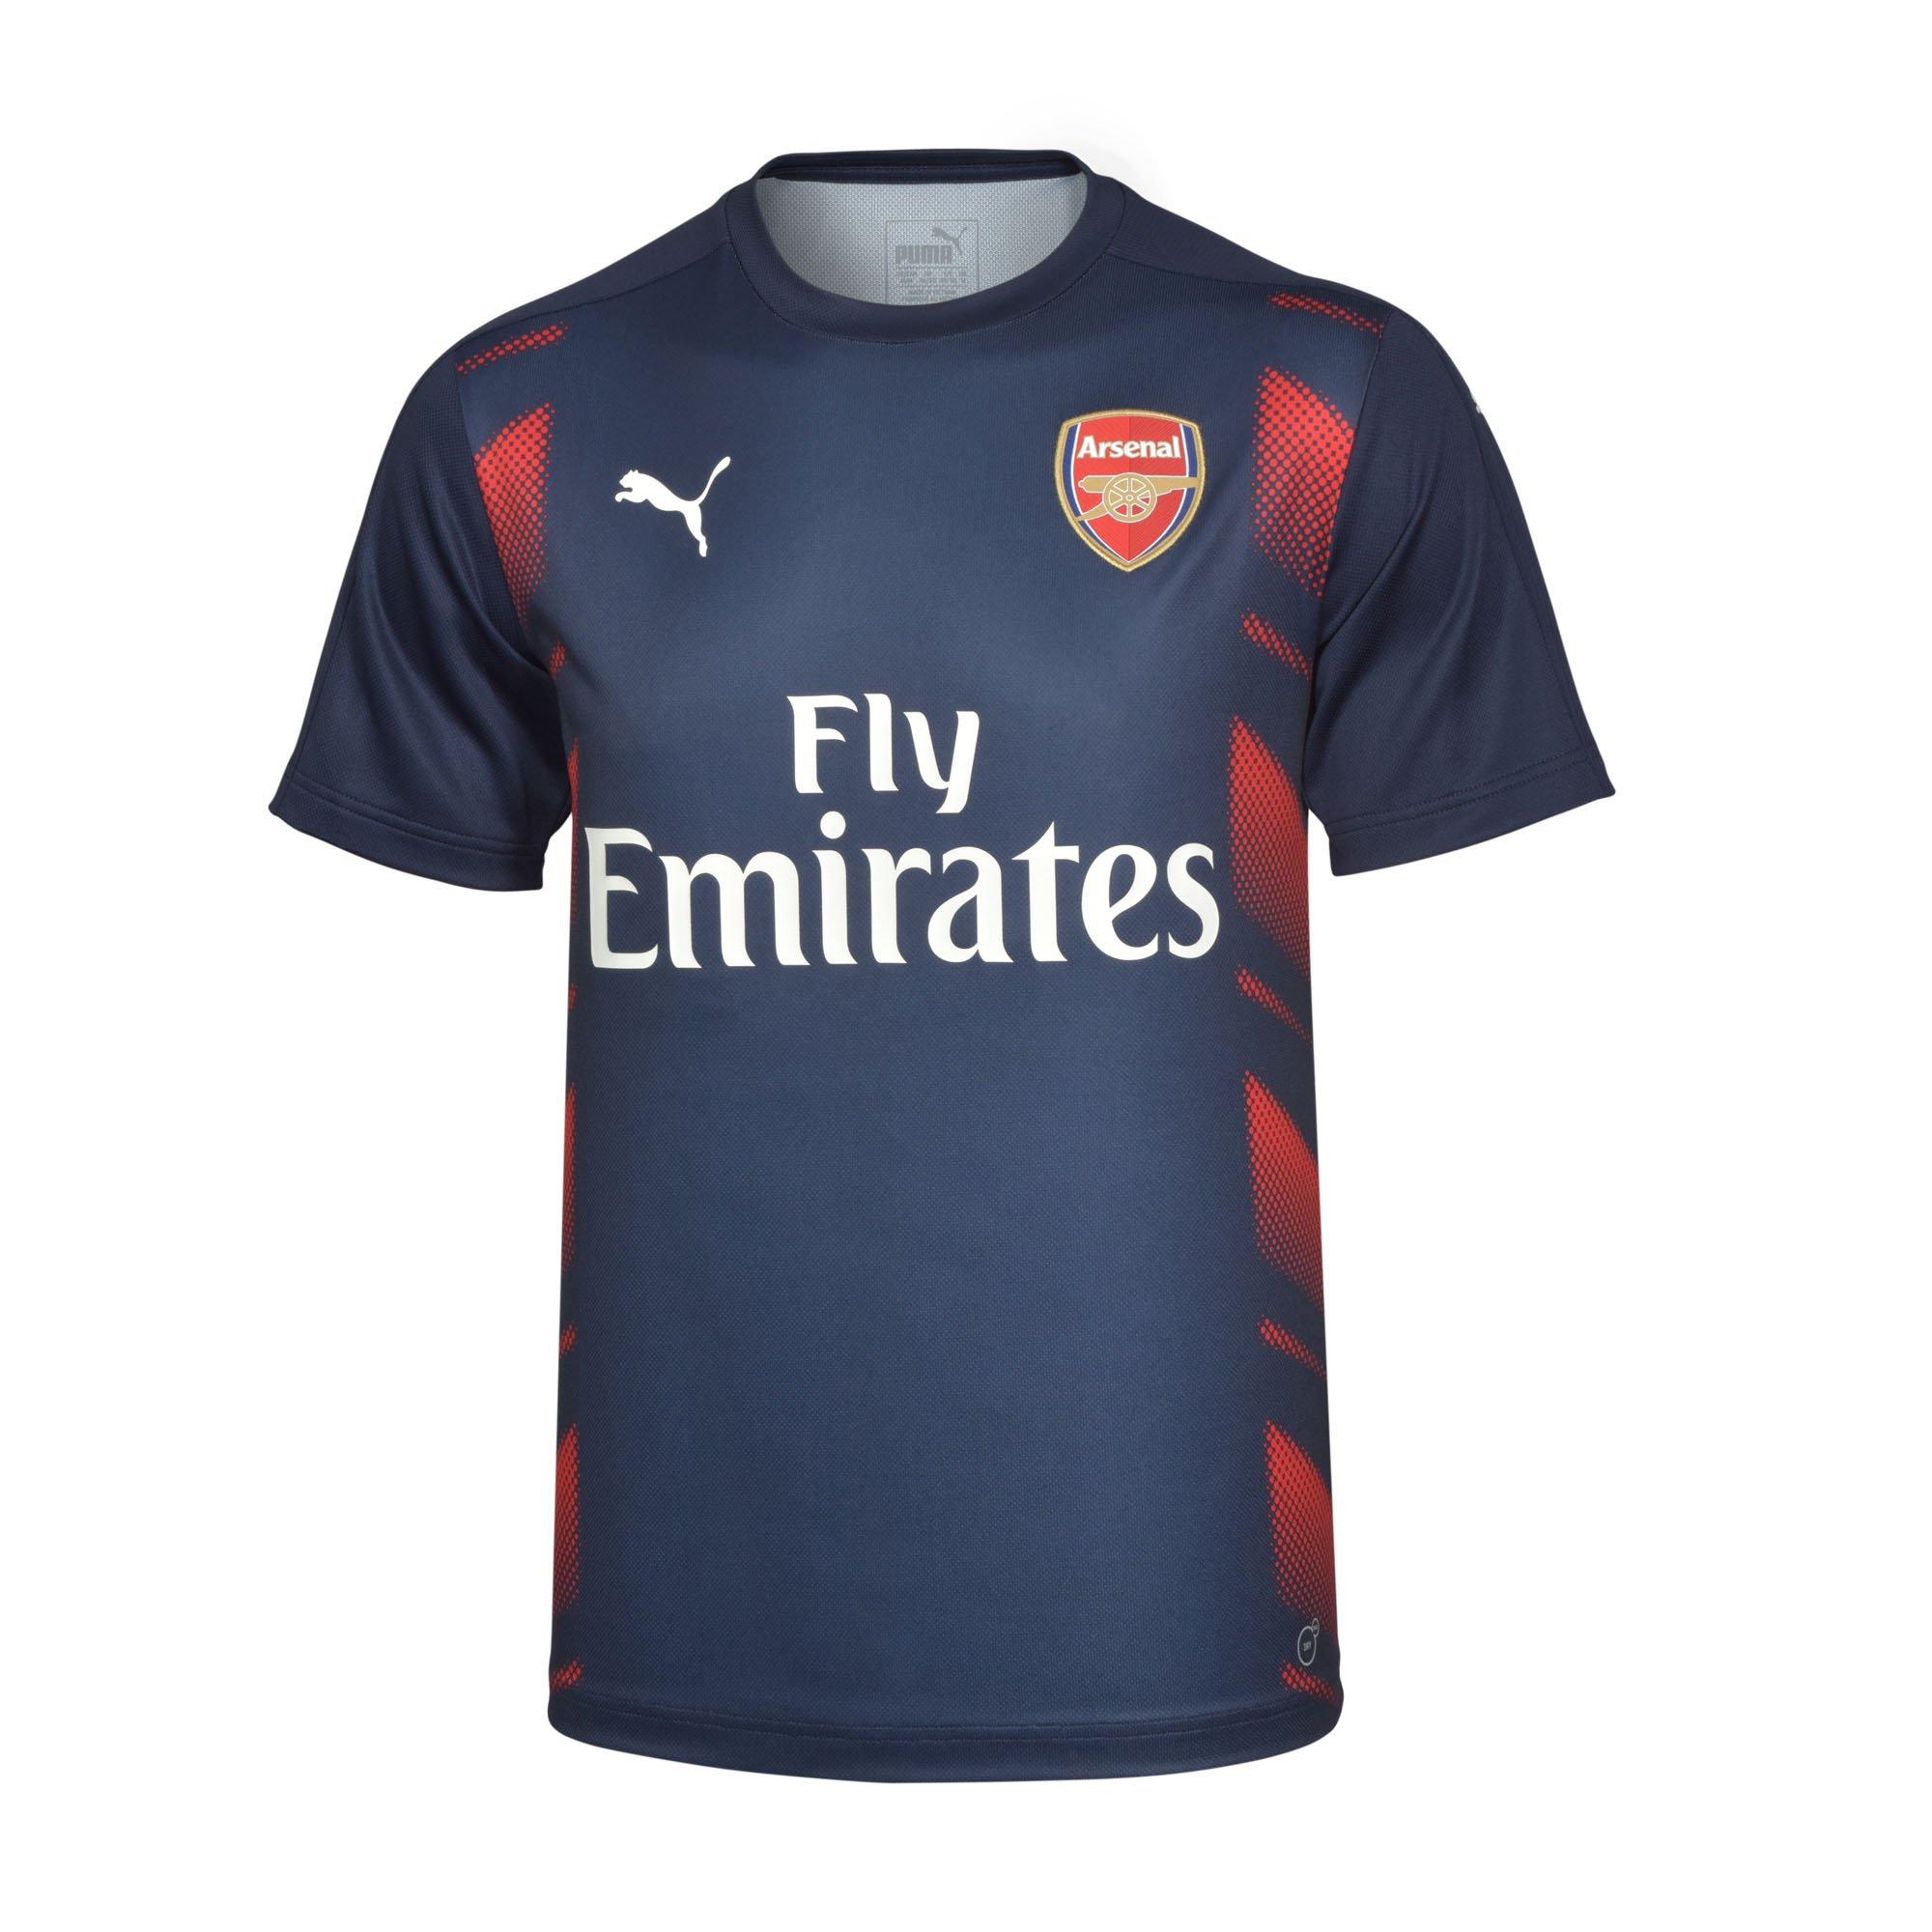 Arsenal Home Stadium Shirt | Arsenal 